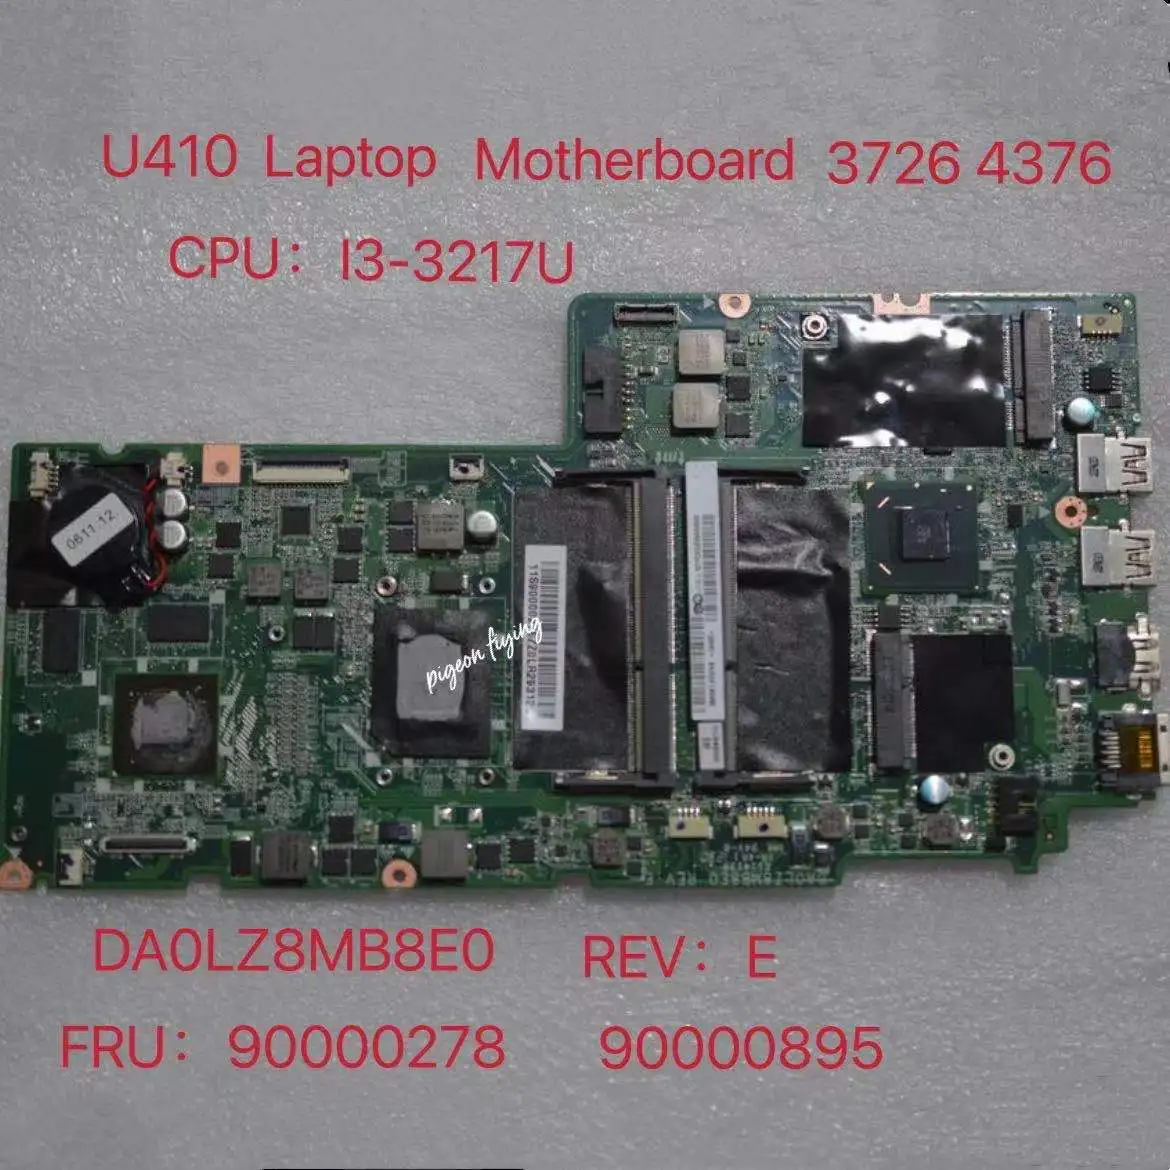 

For Lenovo IdeaPad U410 Laptop Motherboard CPU:I3-3217 1.8G DA0LZ8MBE0 REV:E FRU 90000278 90000895